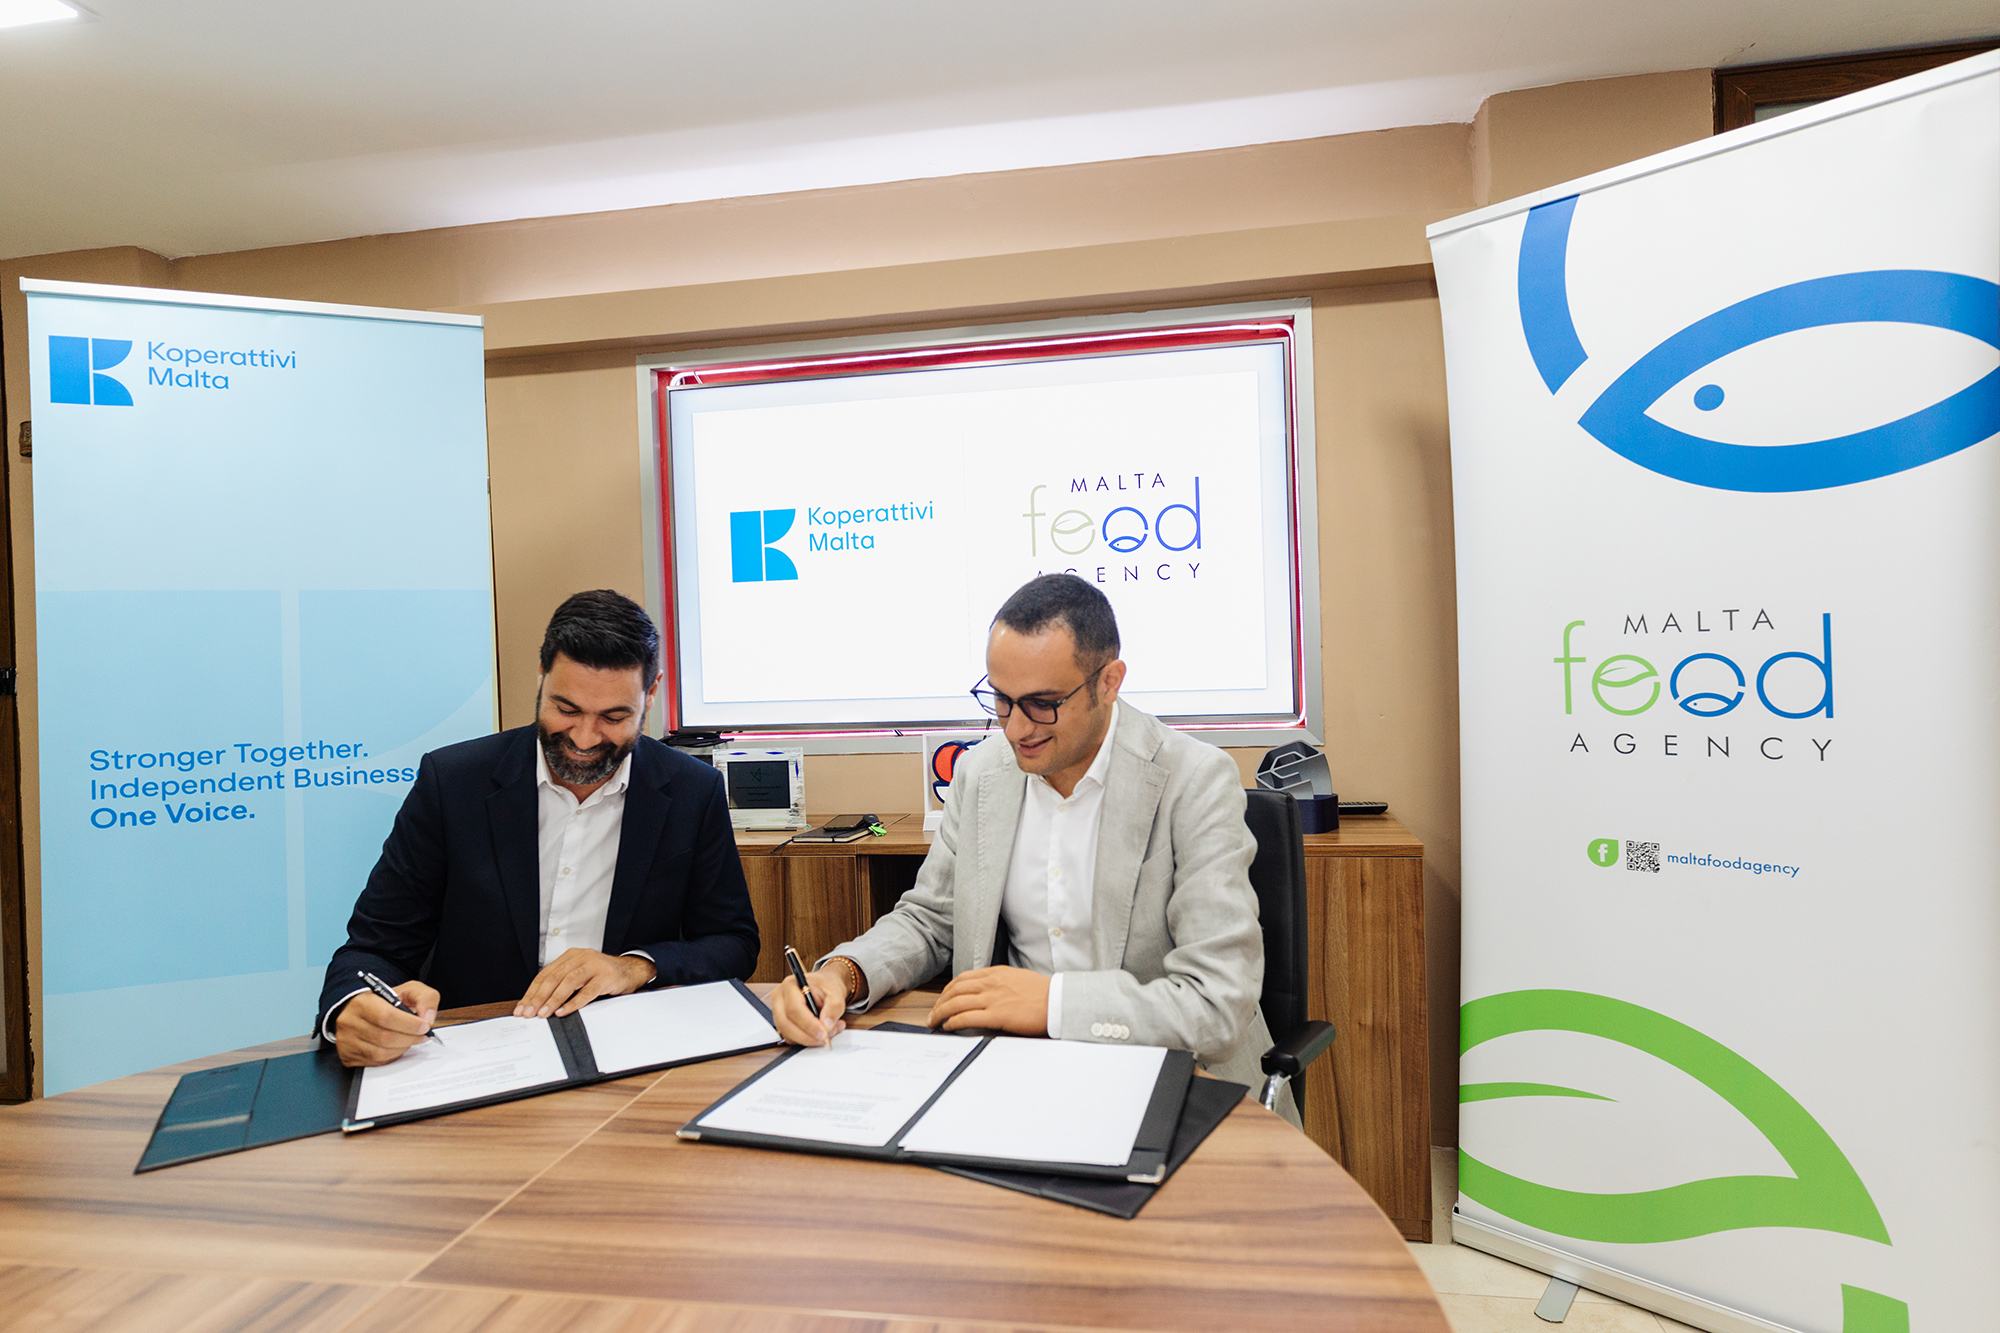 Koperattivi Malta and Malta Food Agency Join Forces to Boost Cooperative Societies in Malta